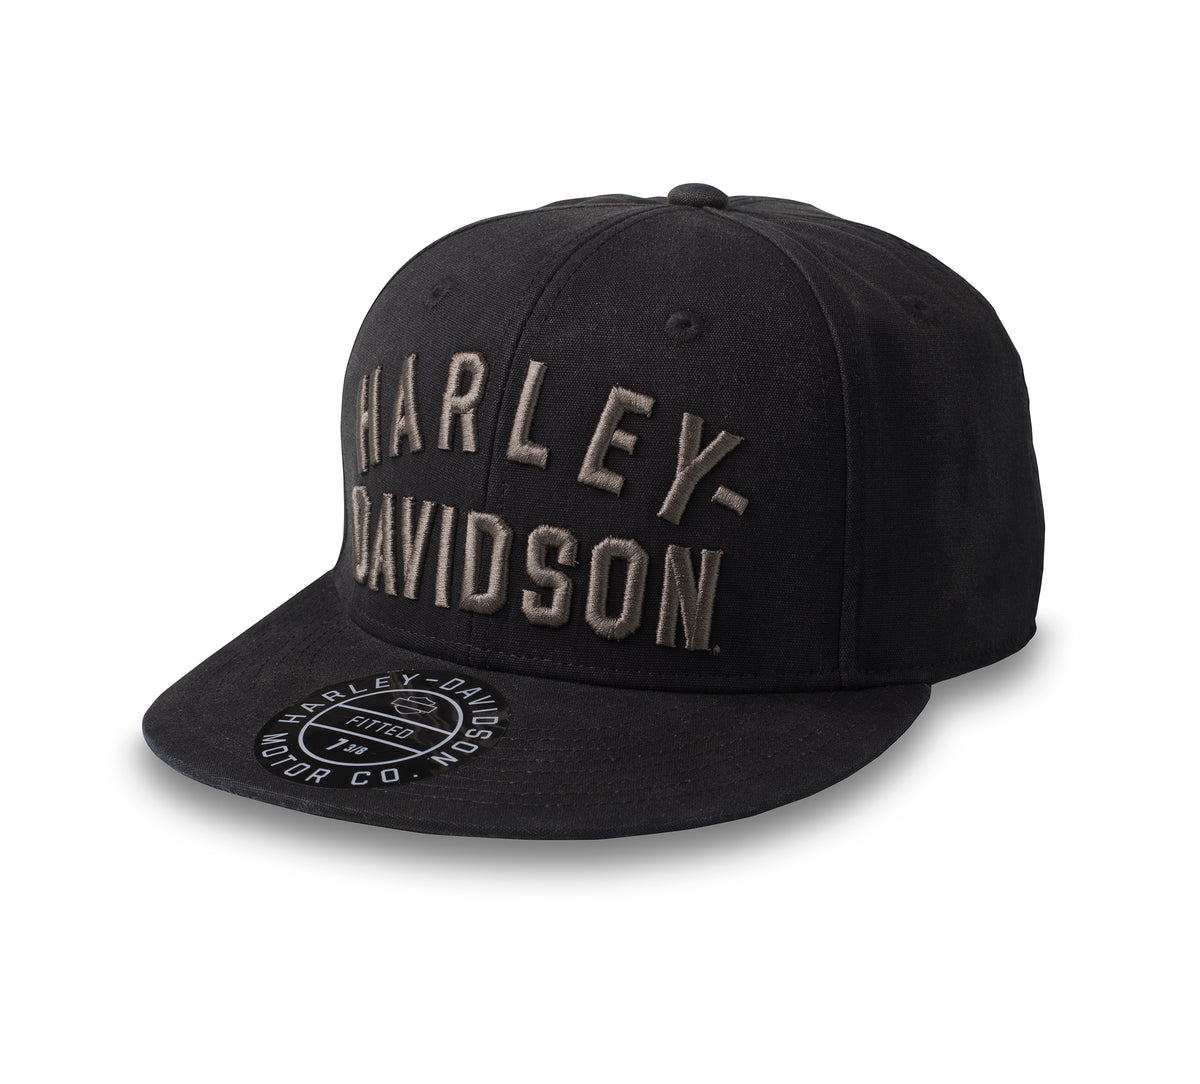 Harley-Davidson Fitted Washed Cap Black